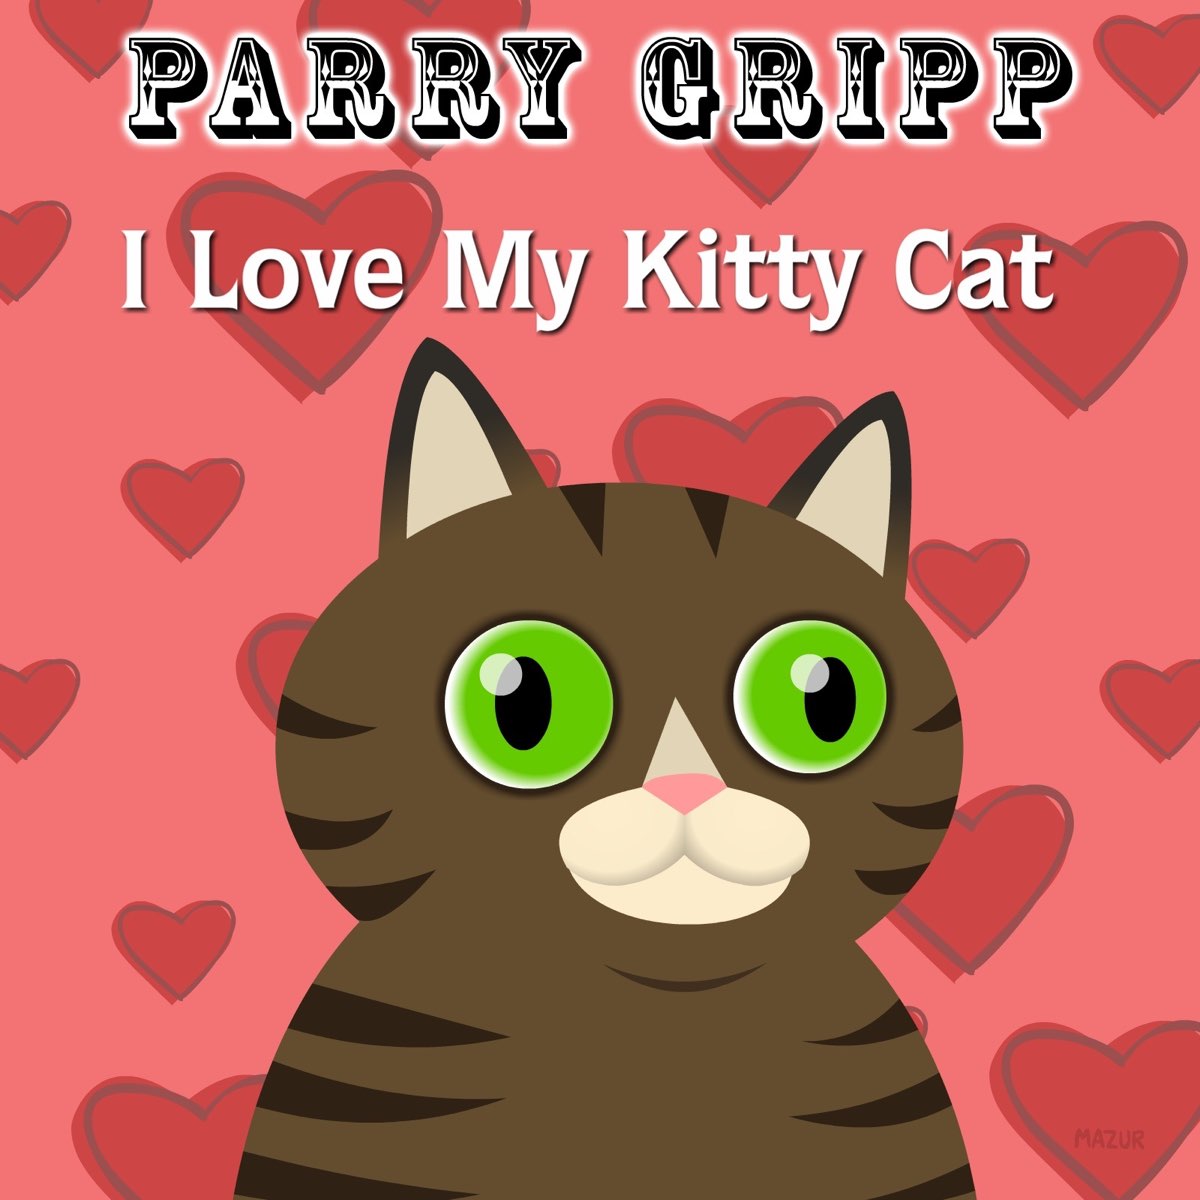 Кэтс песня. Китти-кэтс. Kitty Cat Cat. Китти Кэт исполнительница. I Love my Kitty Cat Parry Gripp.